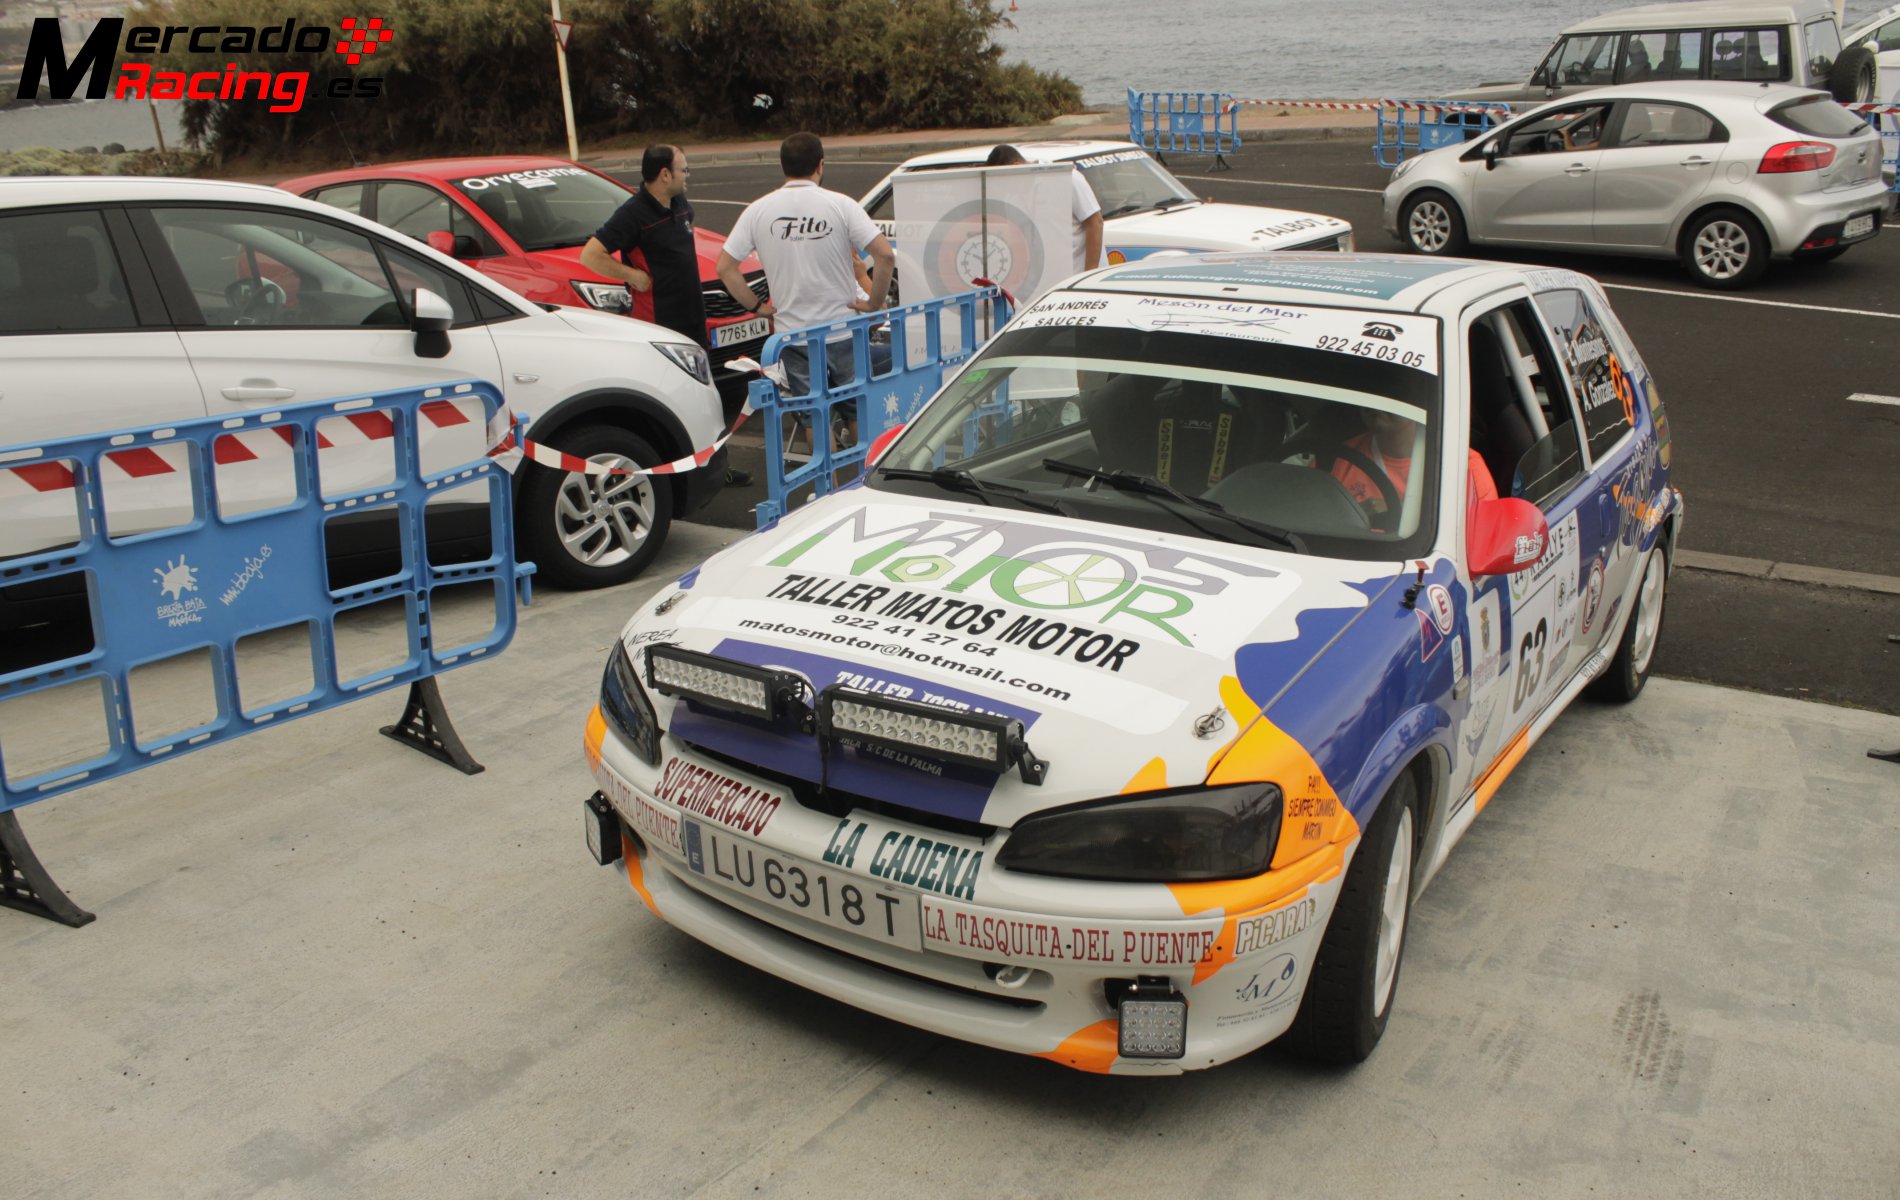 Peugeot 106 rallye de la copa mejorado